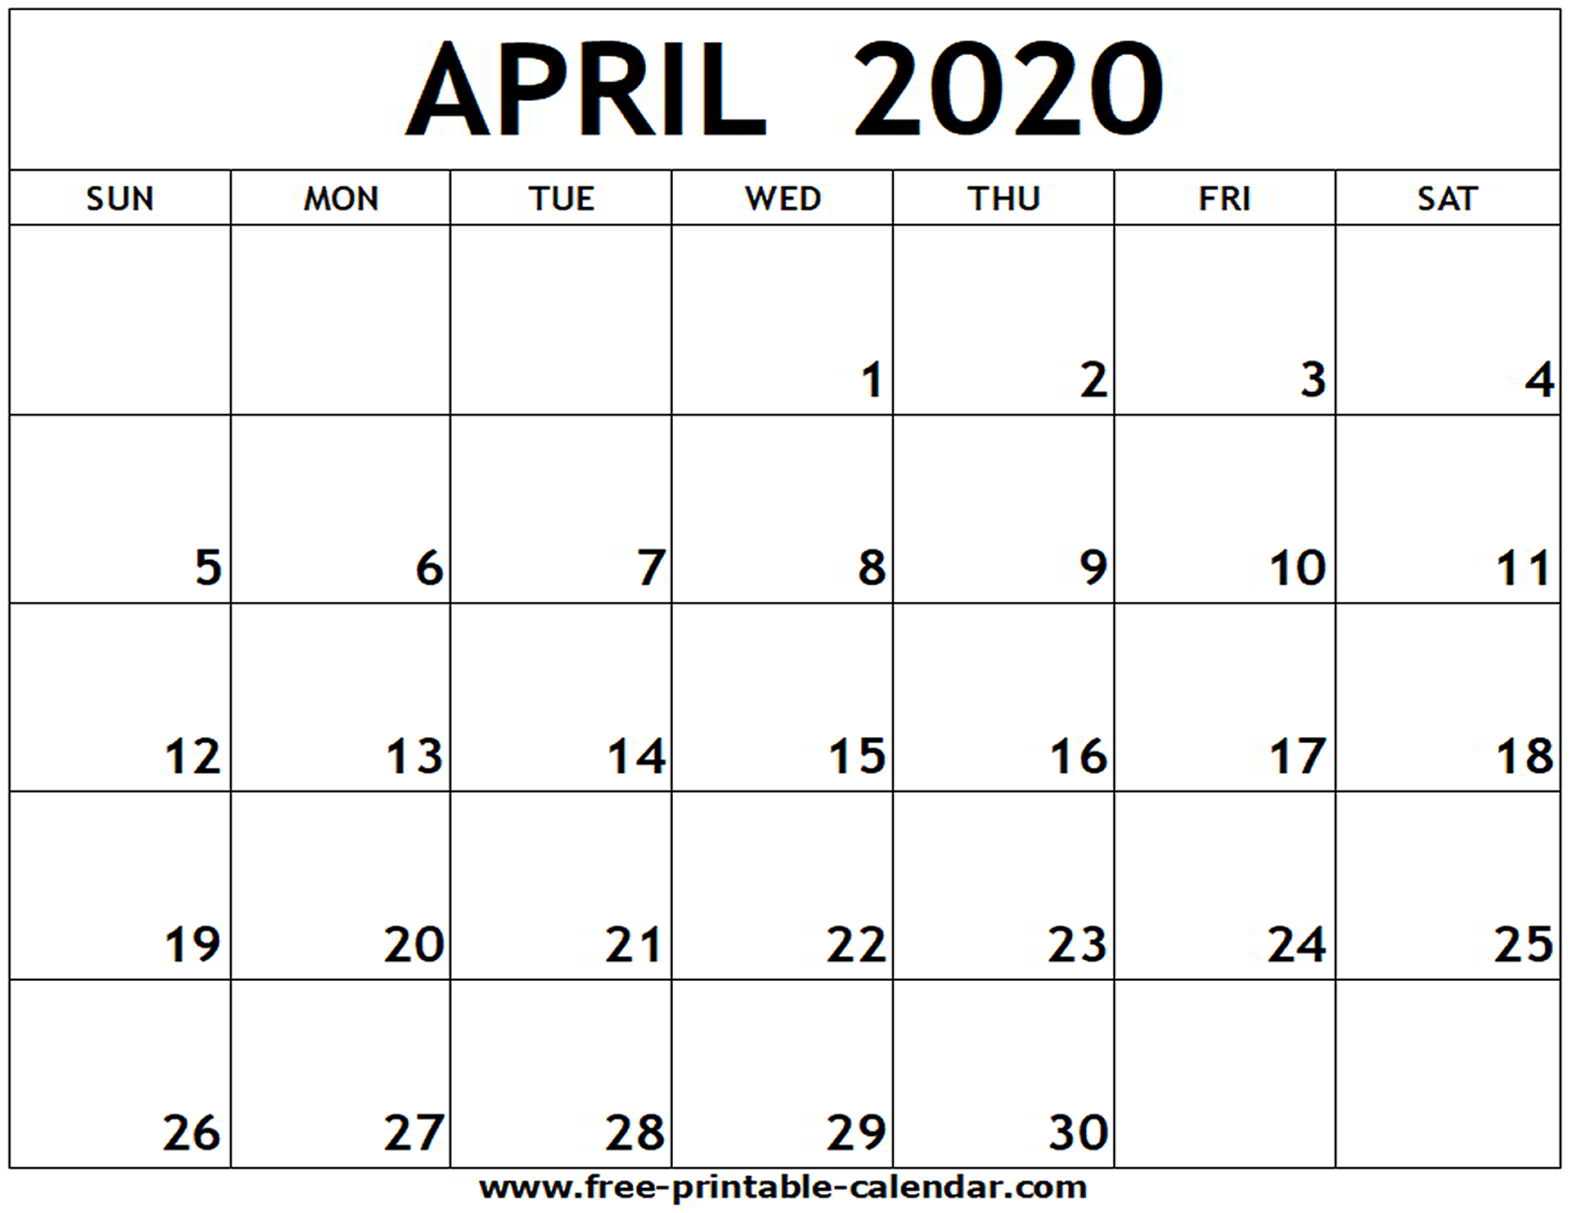 April 2020 Printable Calendar – Free Printable Calendar With Blank Calander Template